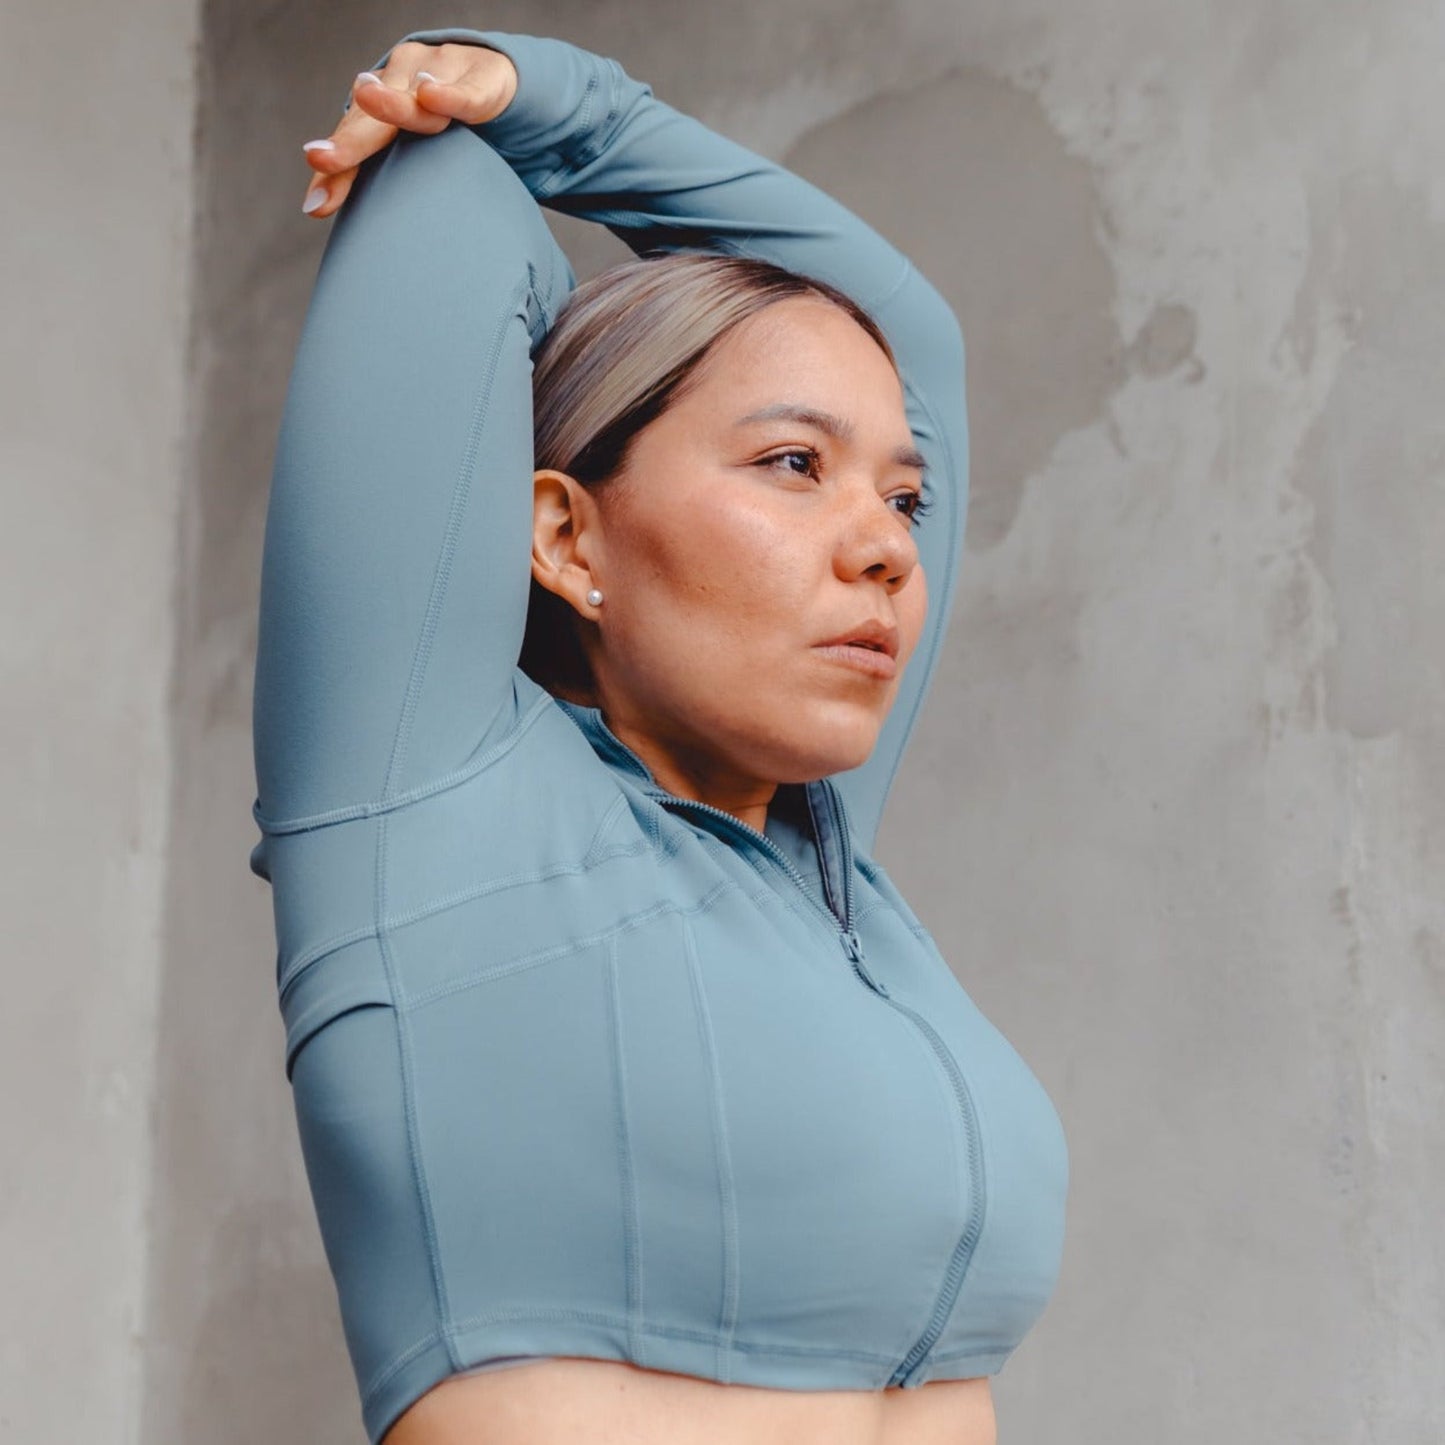 Fitness Model wearing a Steel Blue Crop Jacket from Vibras Activewear.